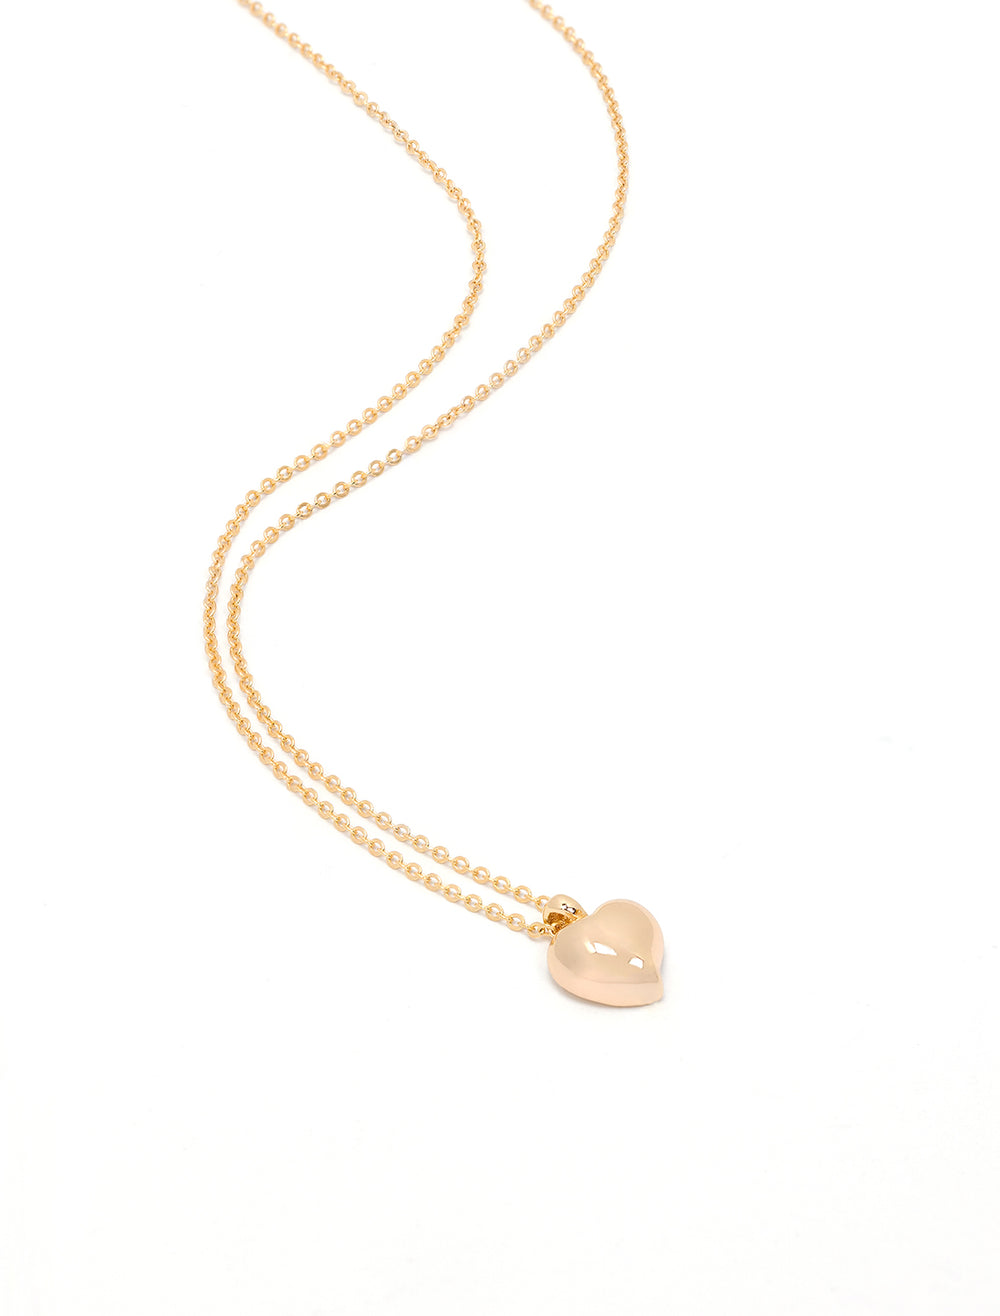 Laydown view of Jonesy Wood's dove heart necklace.